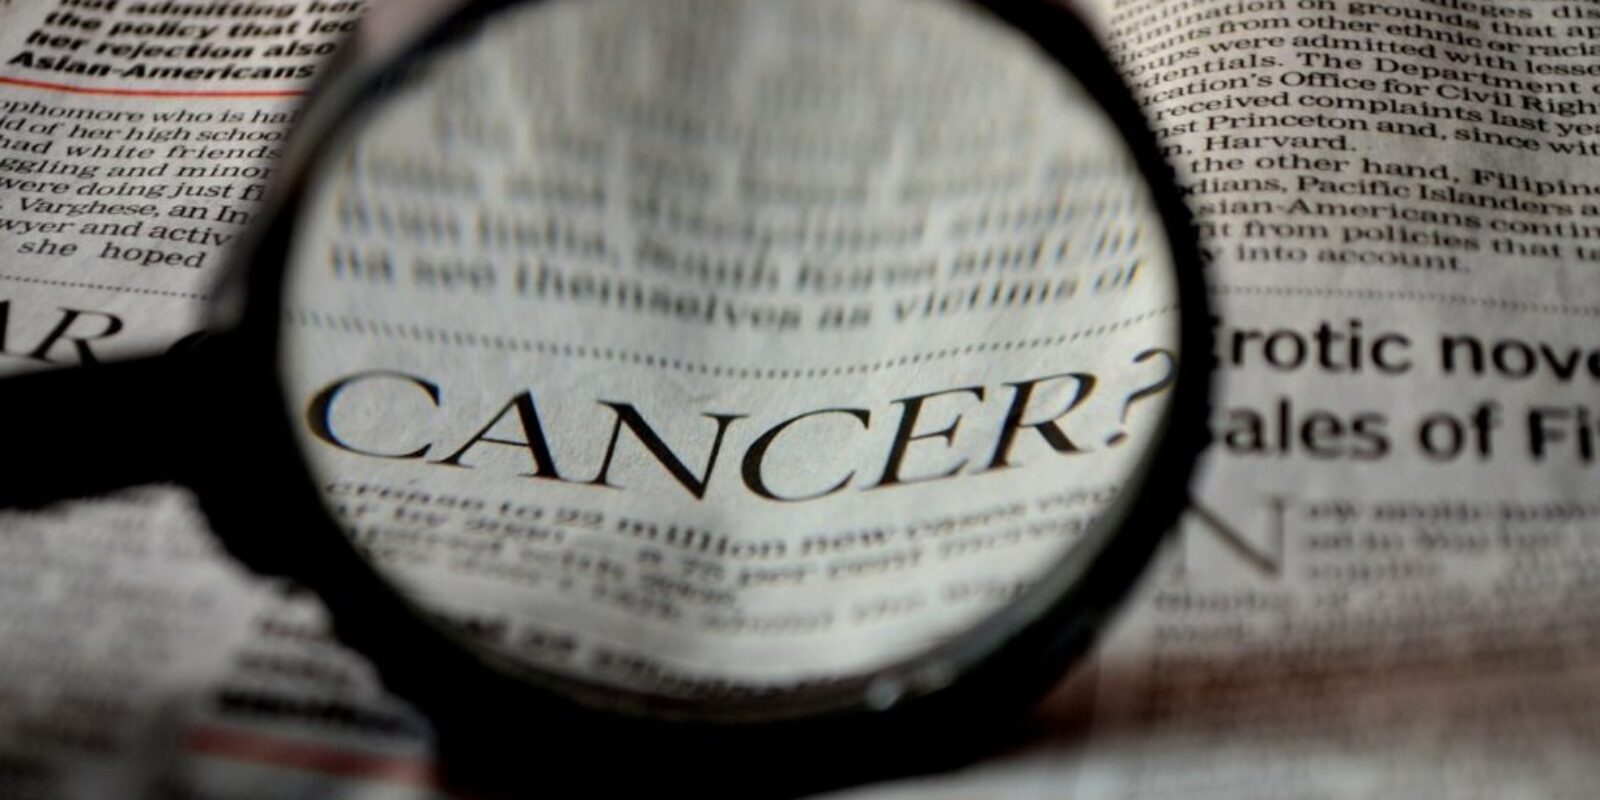 cancer newspaper word magnifier 389921